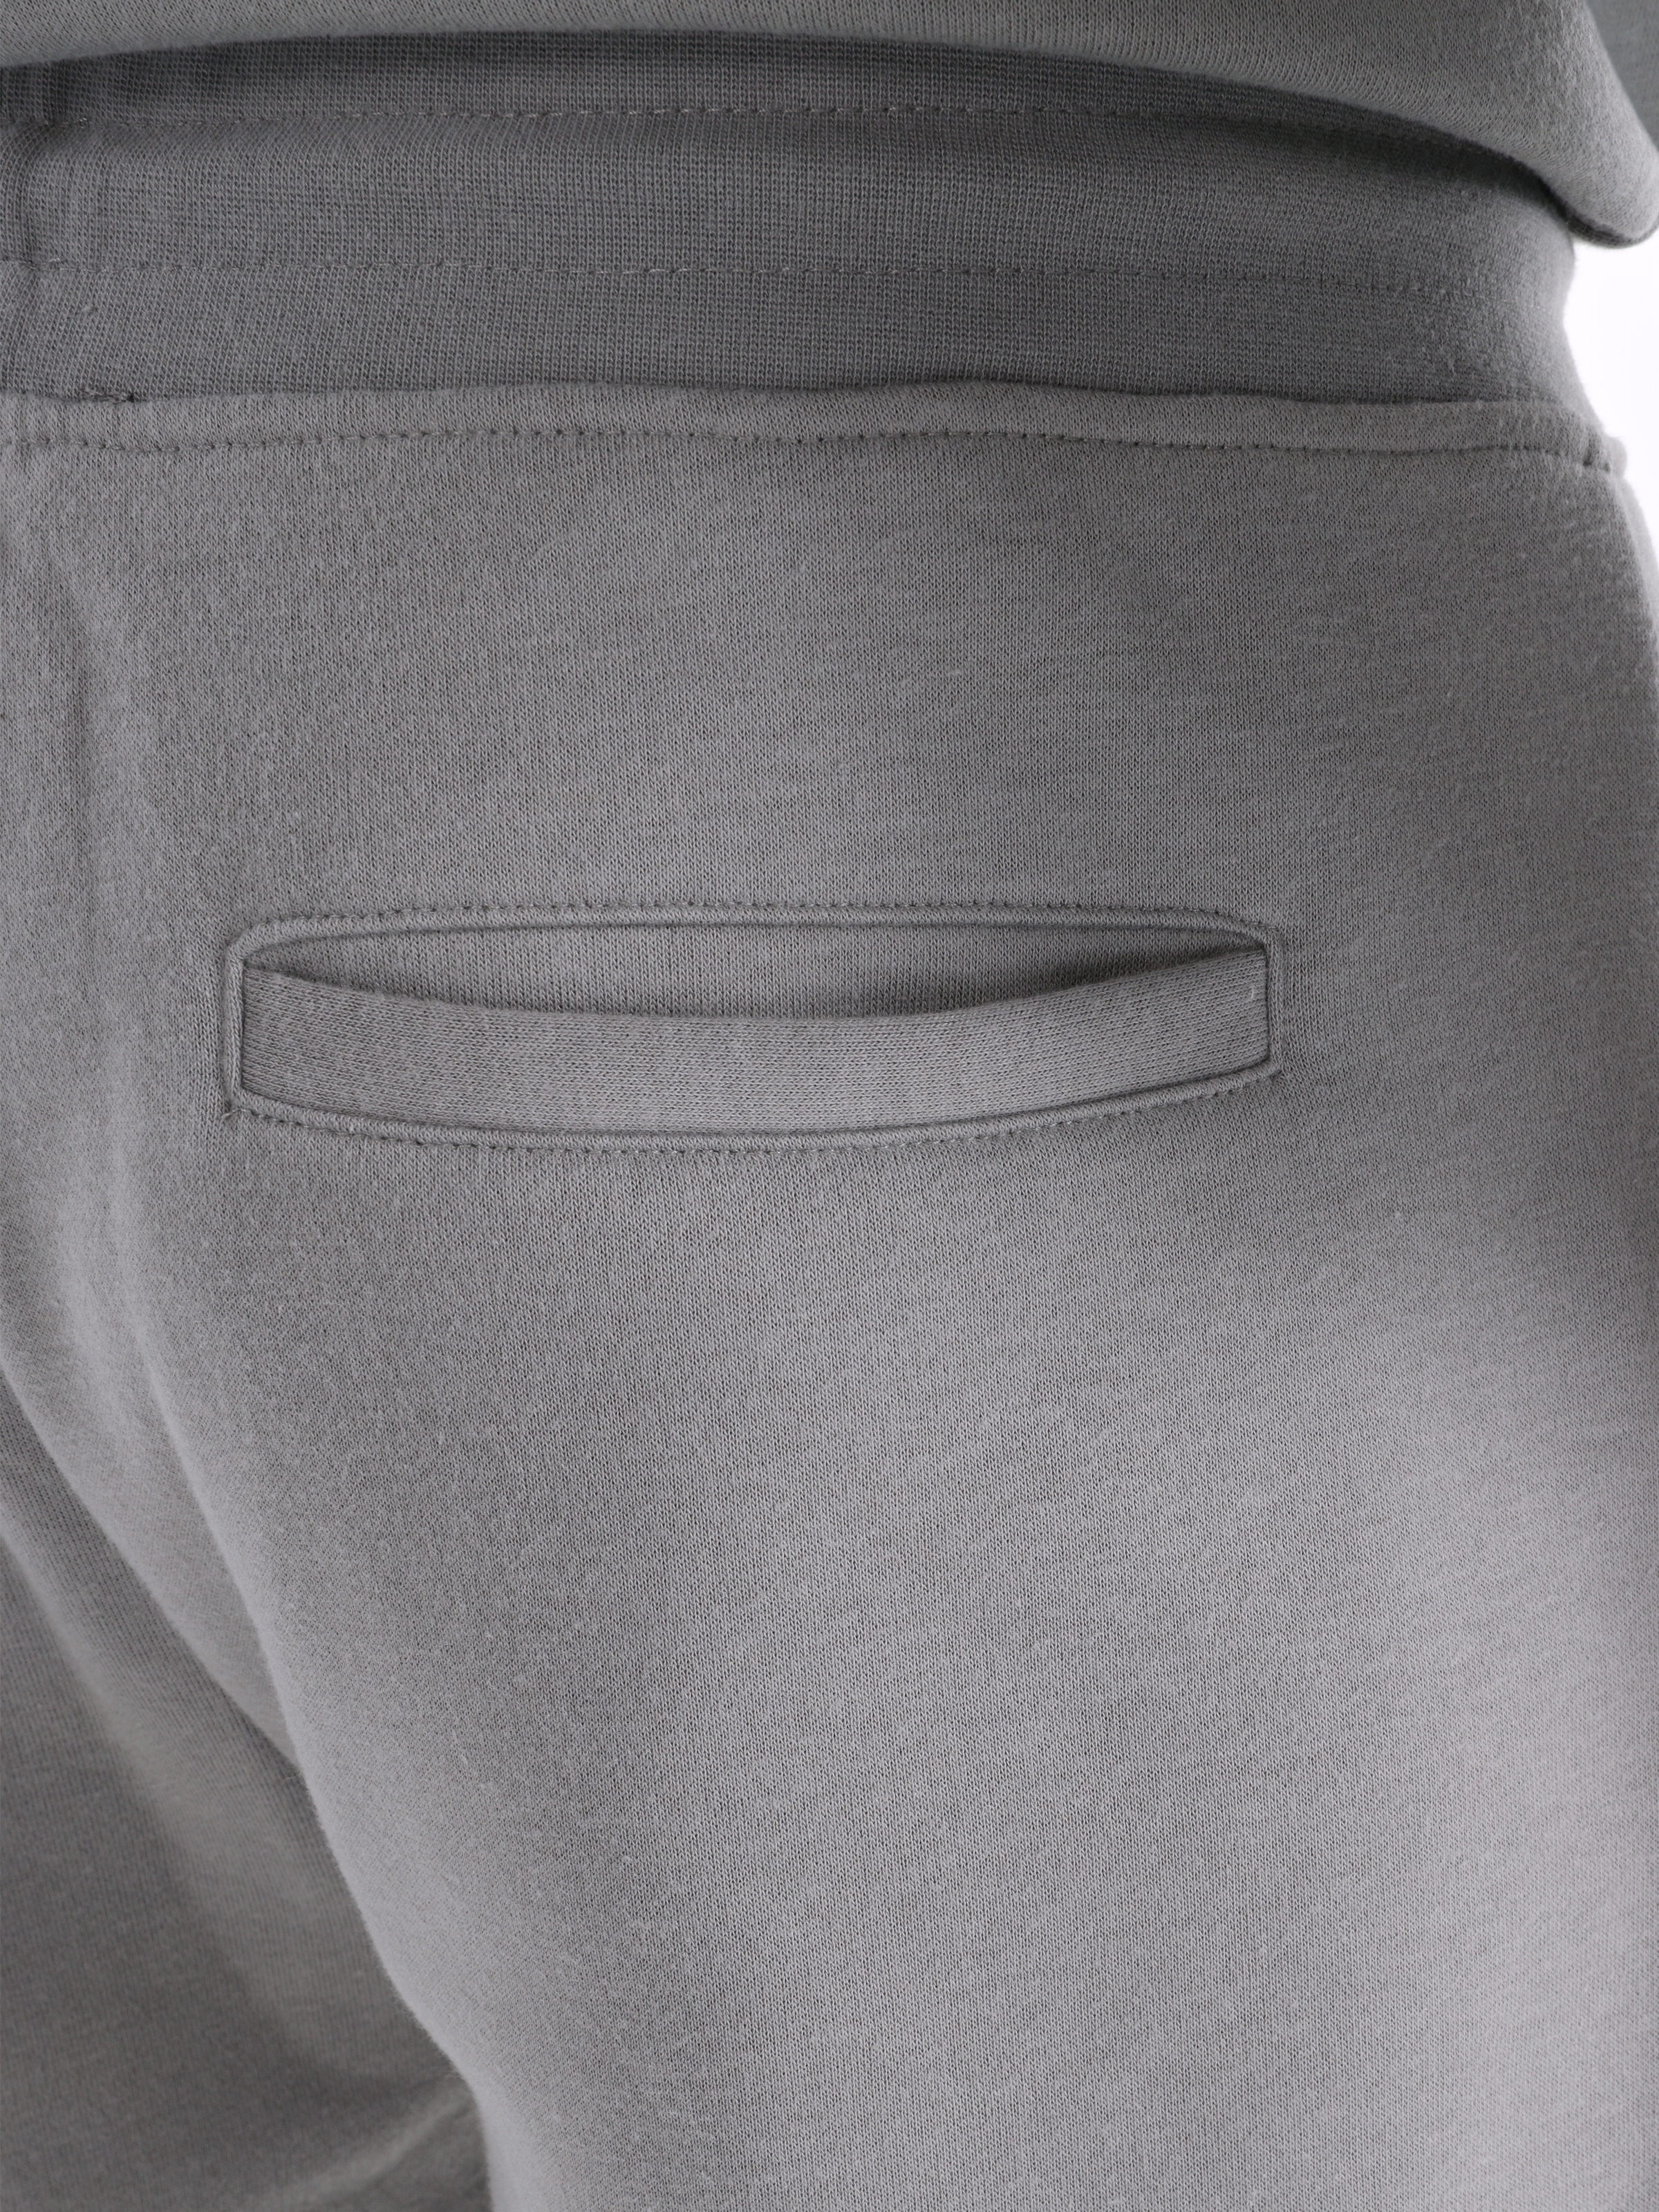 Afișați detalii pentru Pantaloni De Trening De Barbati  Slim Fit 